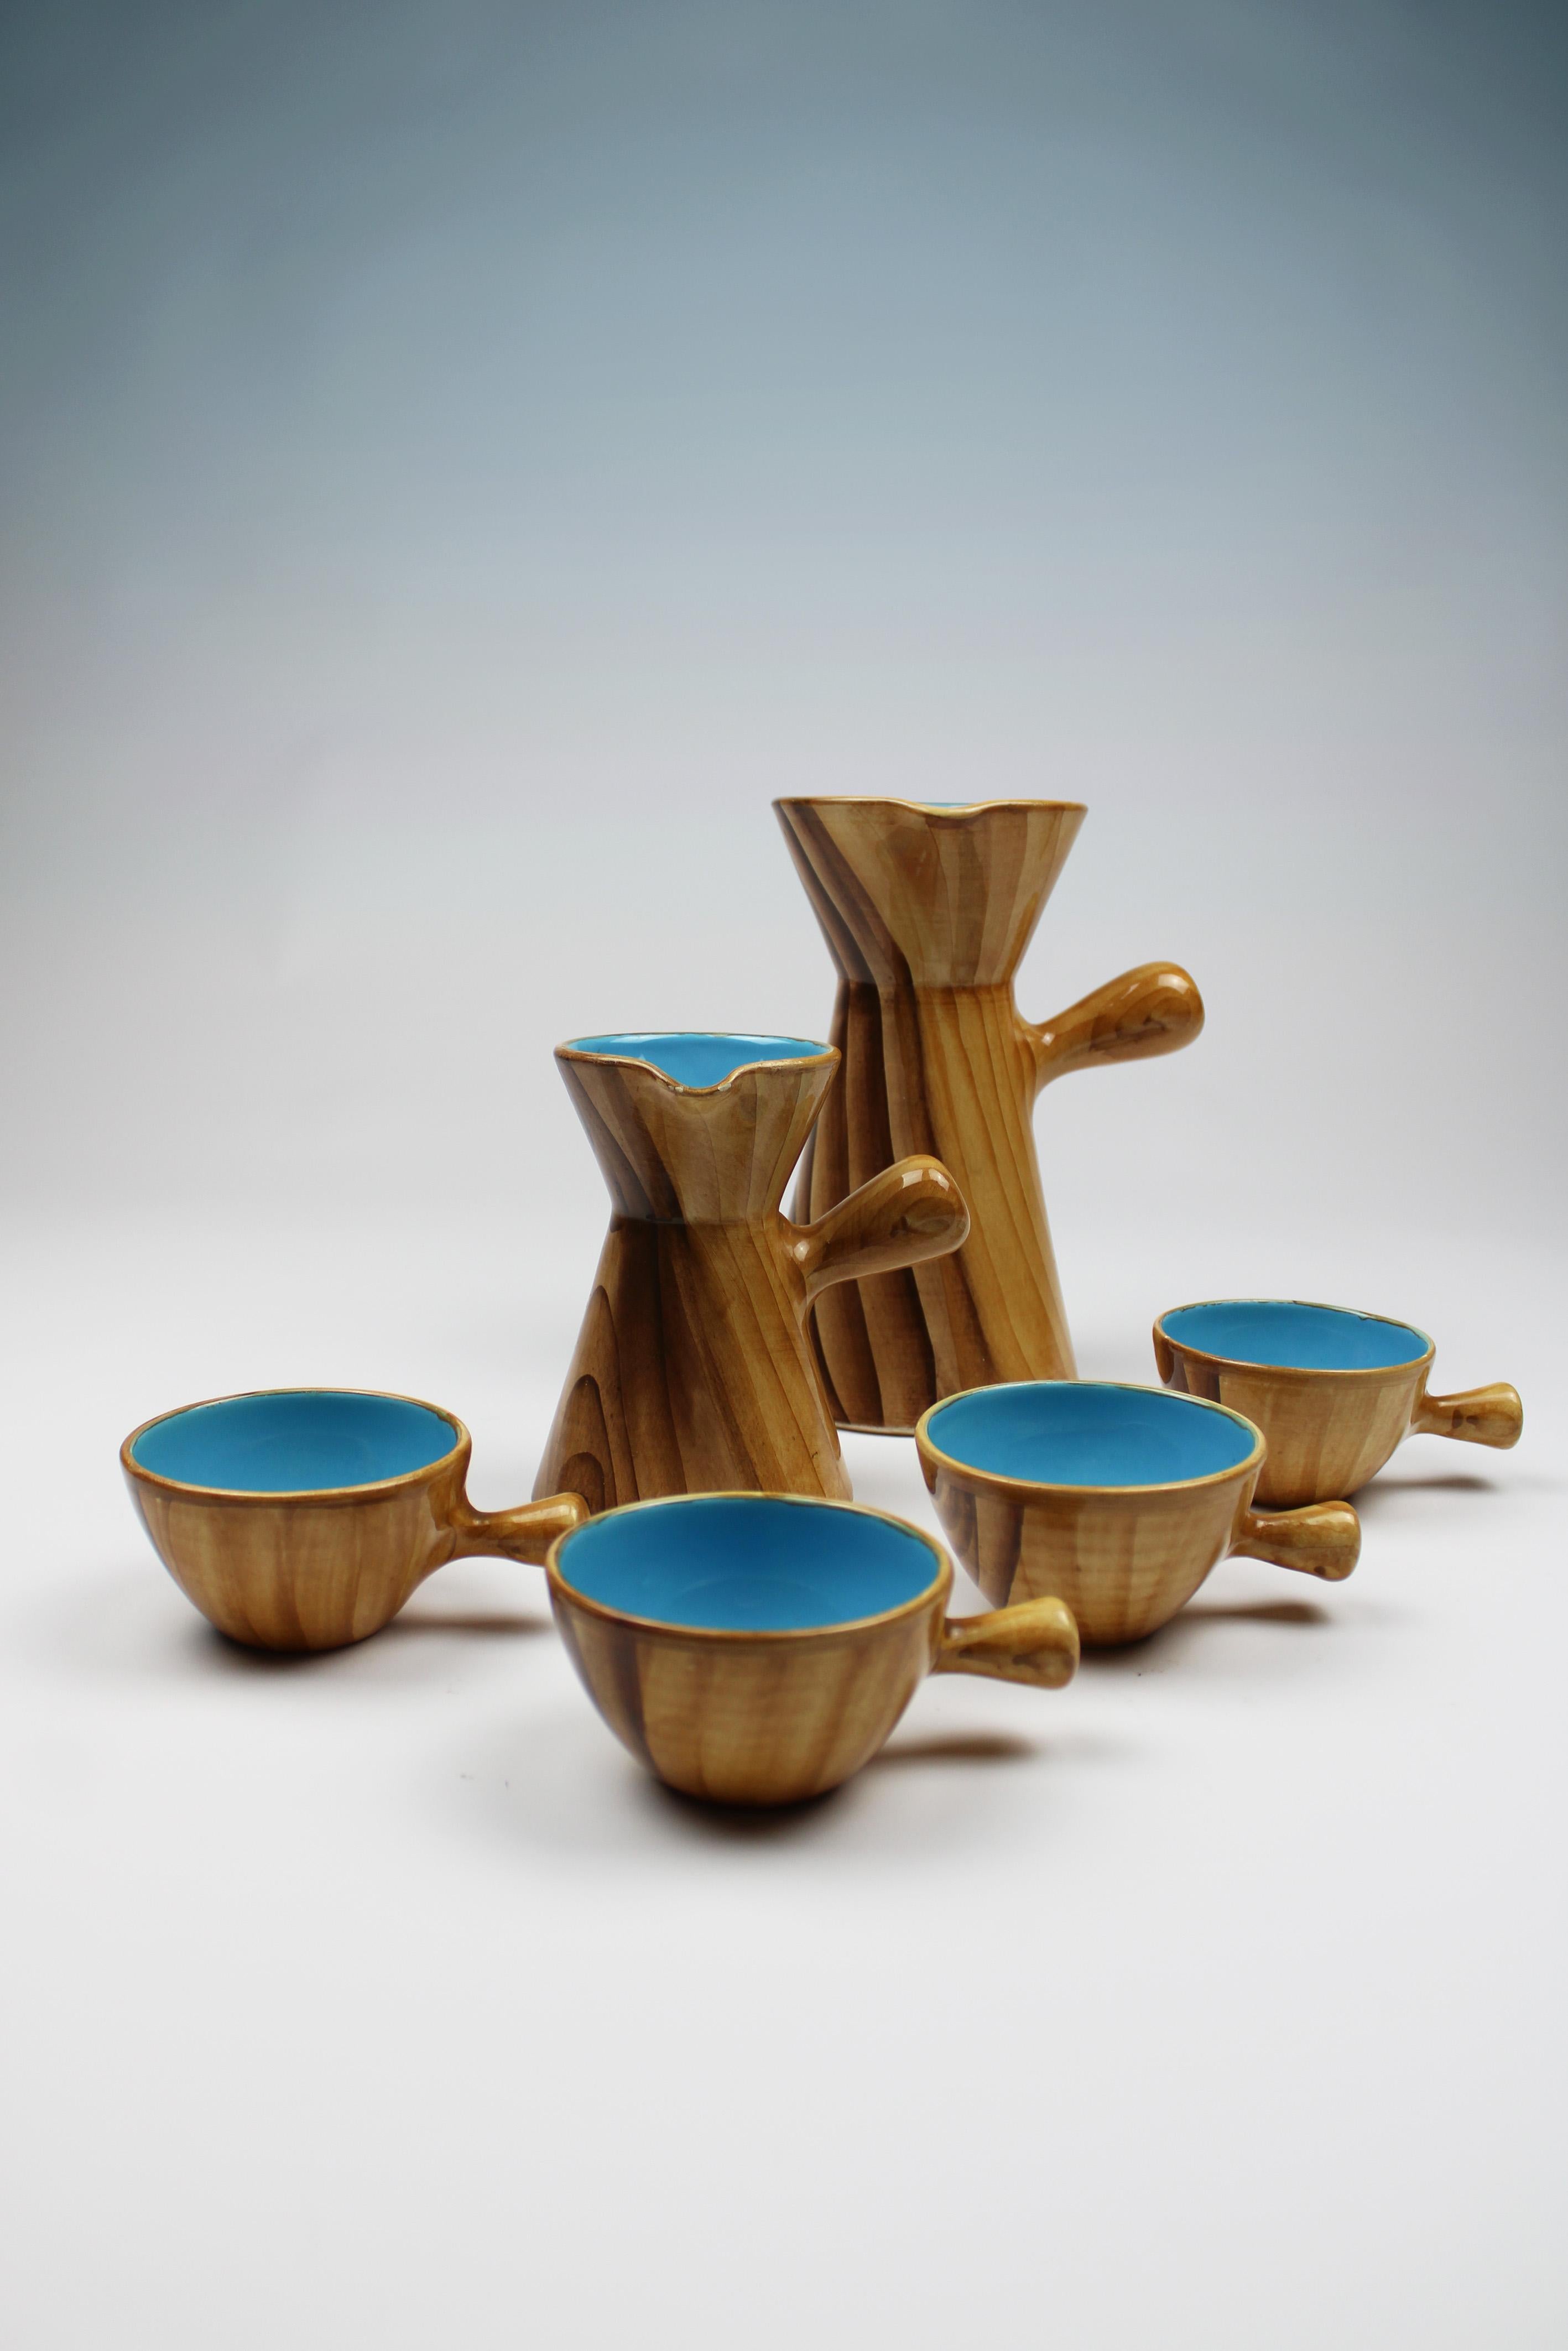 French Provincial Faux Bois Mug & Cups by Grandjean Jourdan Vallauris Ceramics France 1960's For Sale